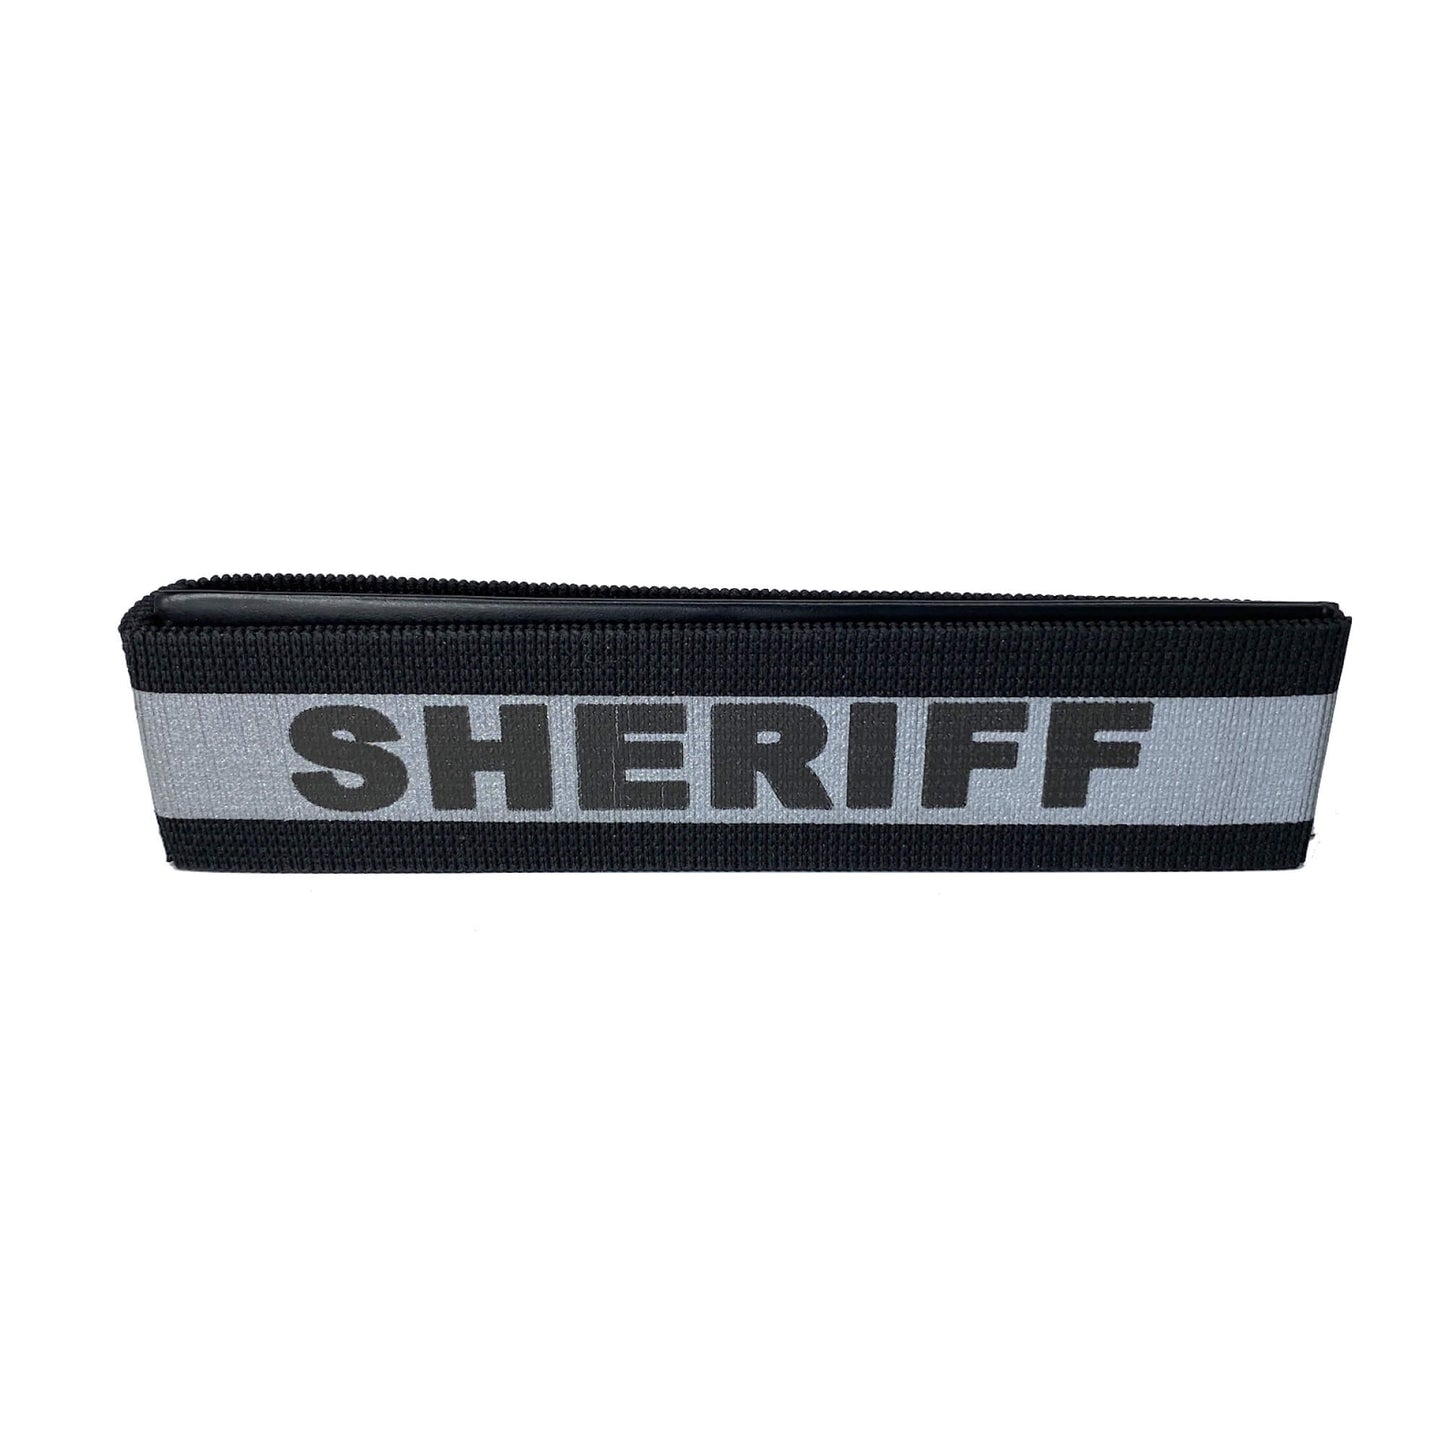 Sheriff Notebook ID Band-Notebands-911 Duty Gear Canada